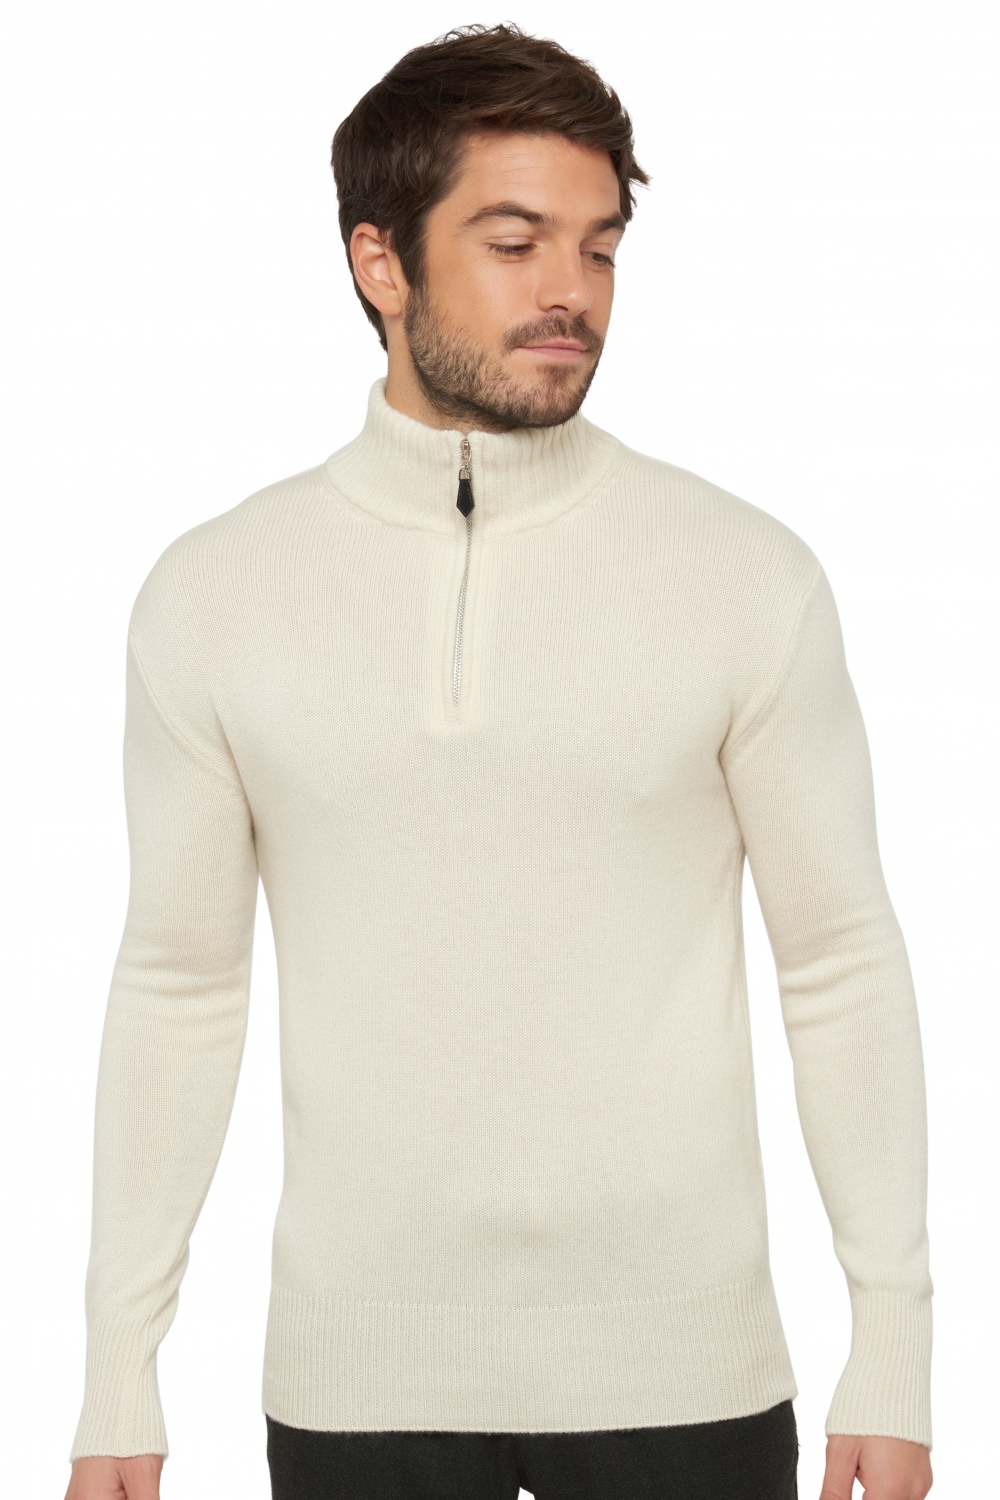 Cashmere men polo style sweaters donovan premium tenzin natural 3xl